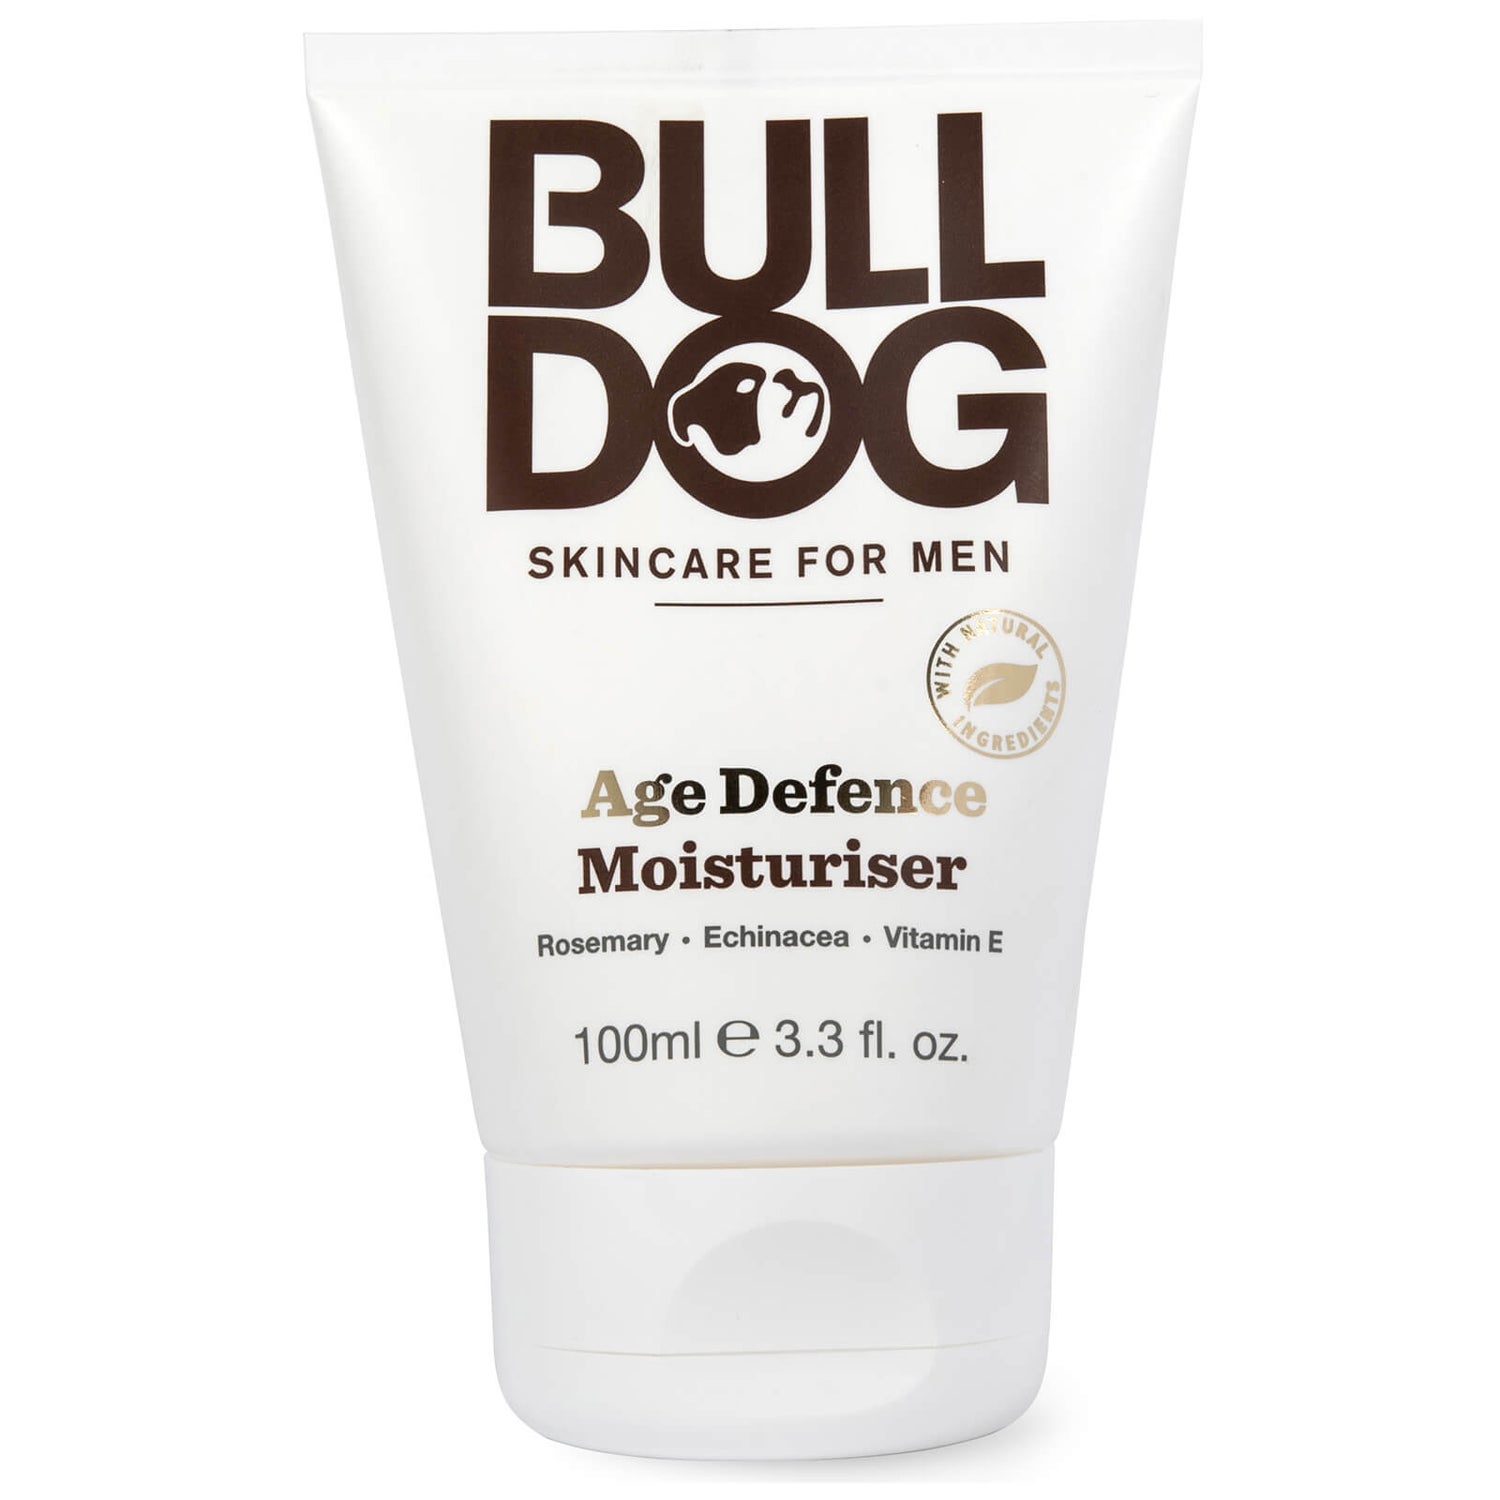 Bulldog anti aging - Die preiswertesten Bulldog anti aging im Vergleich